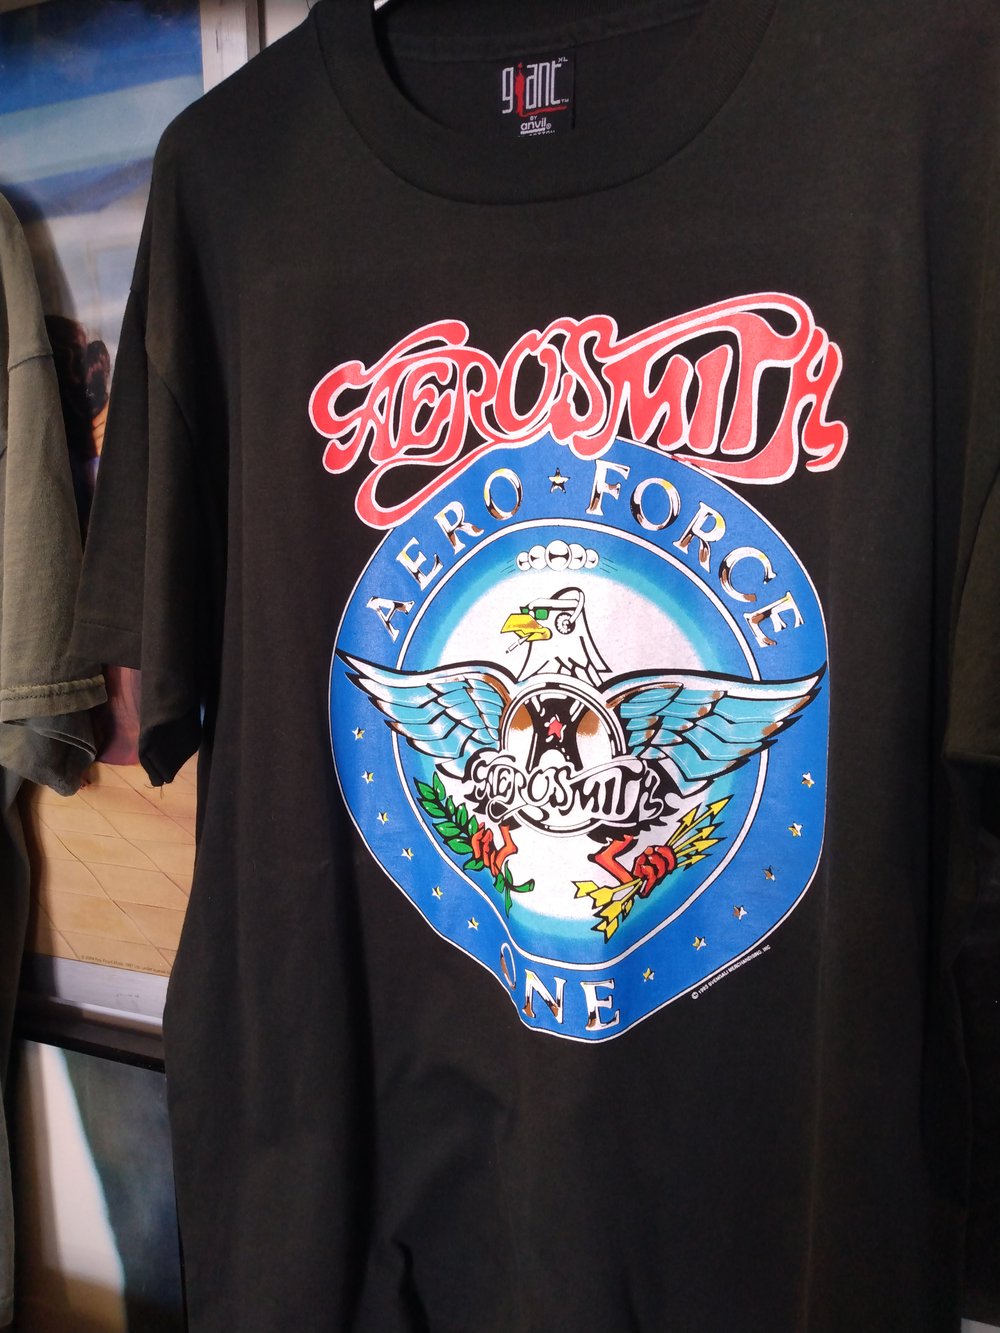 Aerosmith vintage t-shirt 